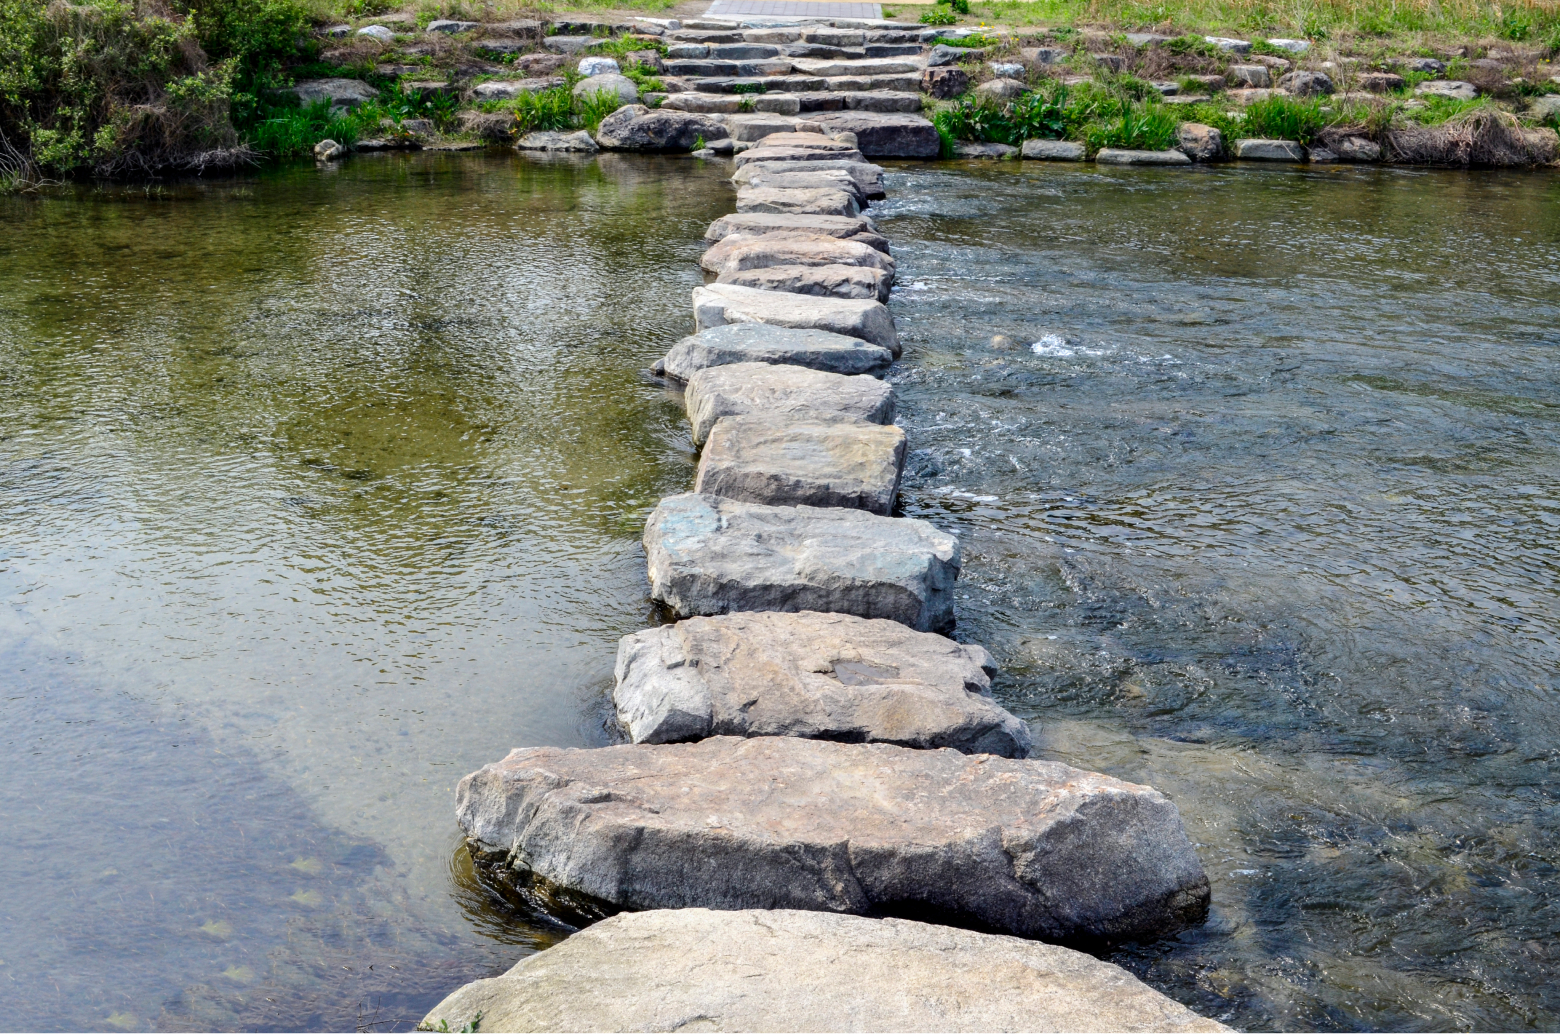 Stepping stones cross a shallow creek